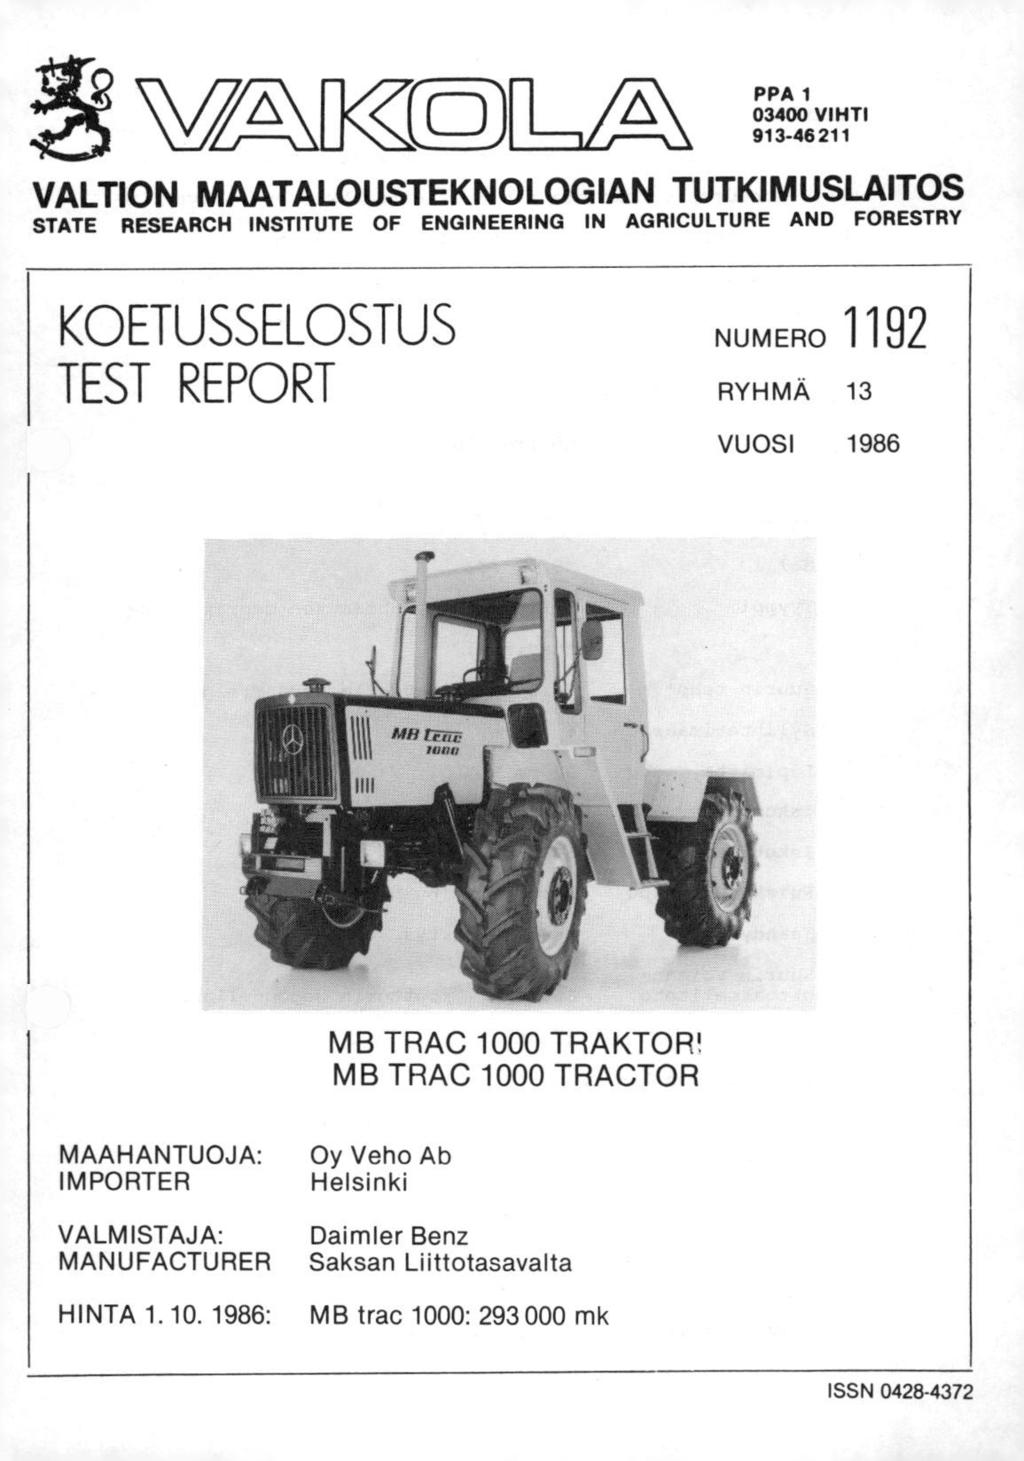 PPA 1 03400 VIHTI 913-46211 VALTION MAATALOUSTEKNOLOGIAN TUTKIMUSLAITOS STATE RESEARCH INSTITUTE OF ENGINEERING IN AGRICULTURE AND FORESTRY KOETUSSELOSTUS TEST REPORT NUMERO 1192 RYHMÄ 13 VUOSI 1986